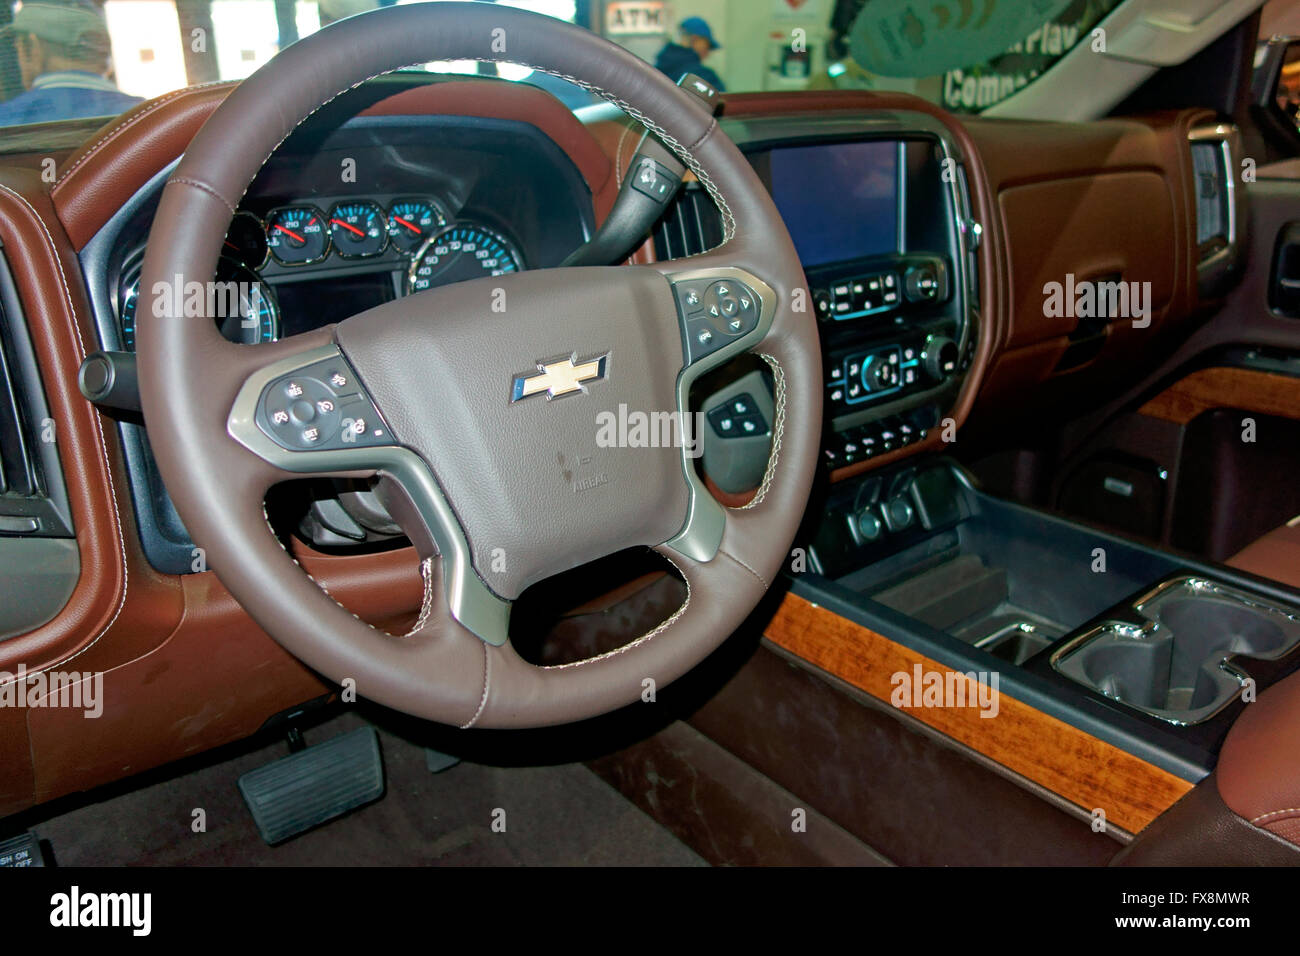 GMC 1500 truck interior Stock Photo